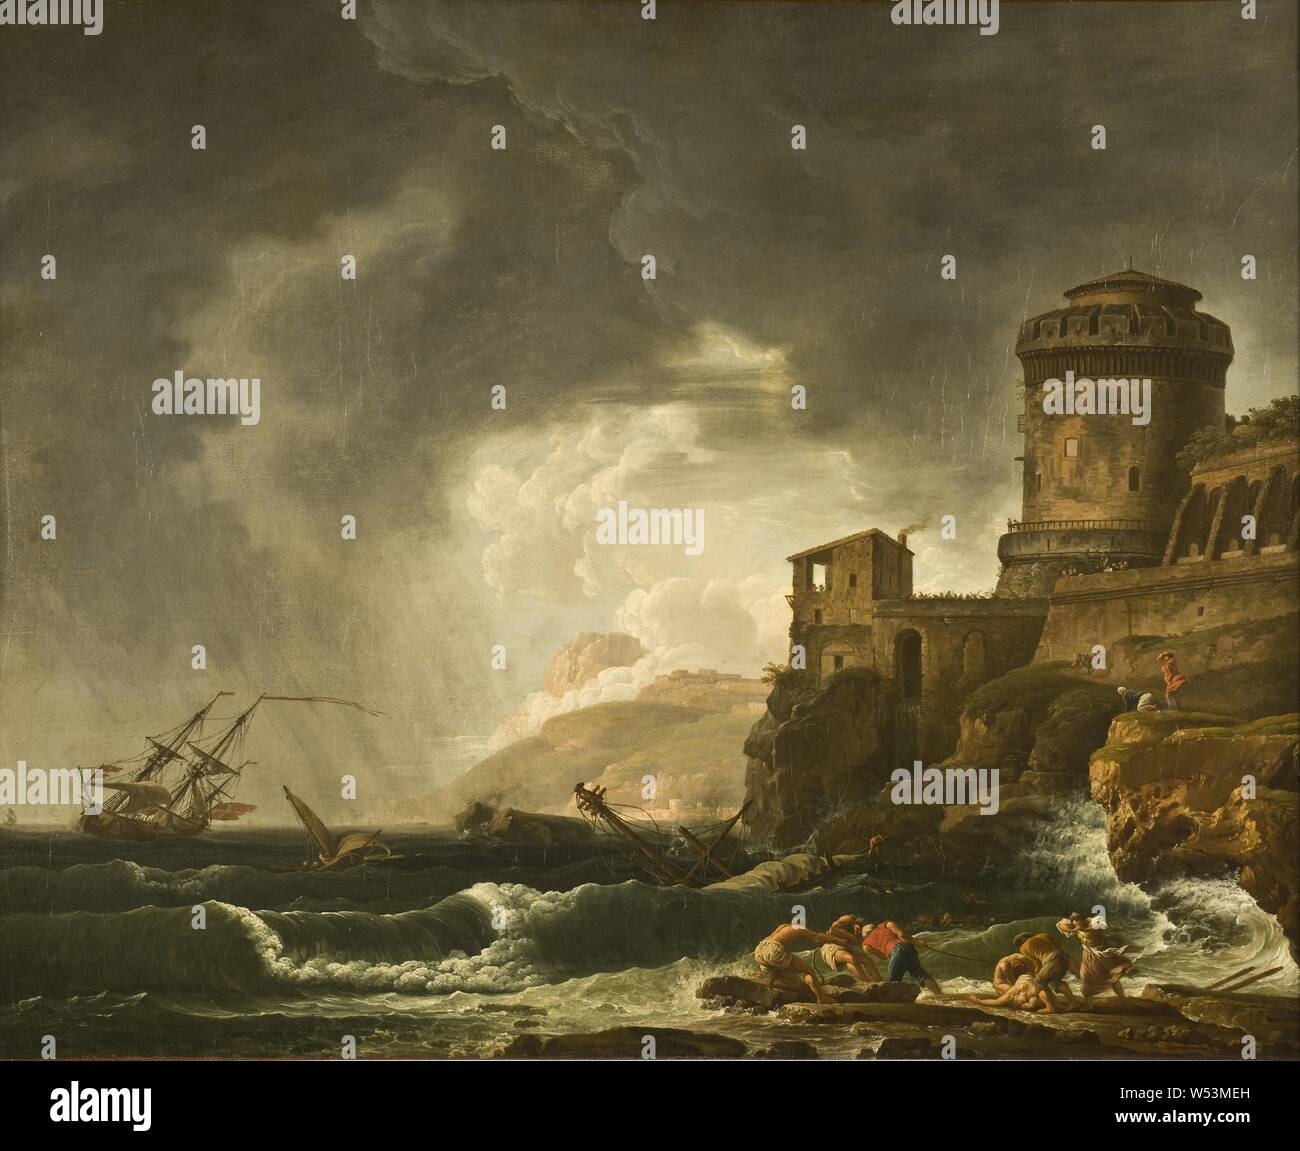 Johan Sevenbom, ein Schiffswrack, Schiffbruch, Malerei, 1750, Öl auf Leinwand, Höhe 78 cm (30,7 Zoll), Breite 99 cm (38,9 Zoll) Stockfoto